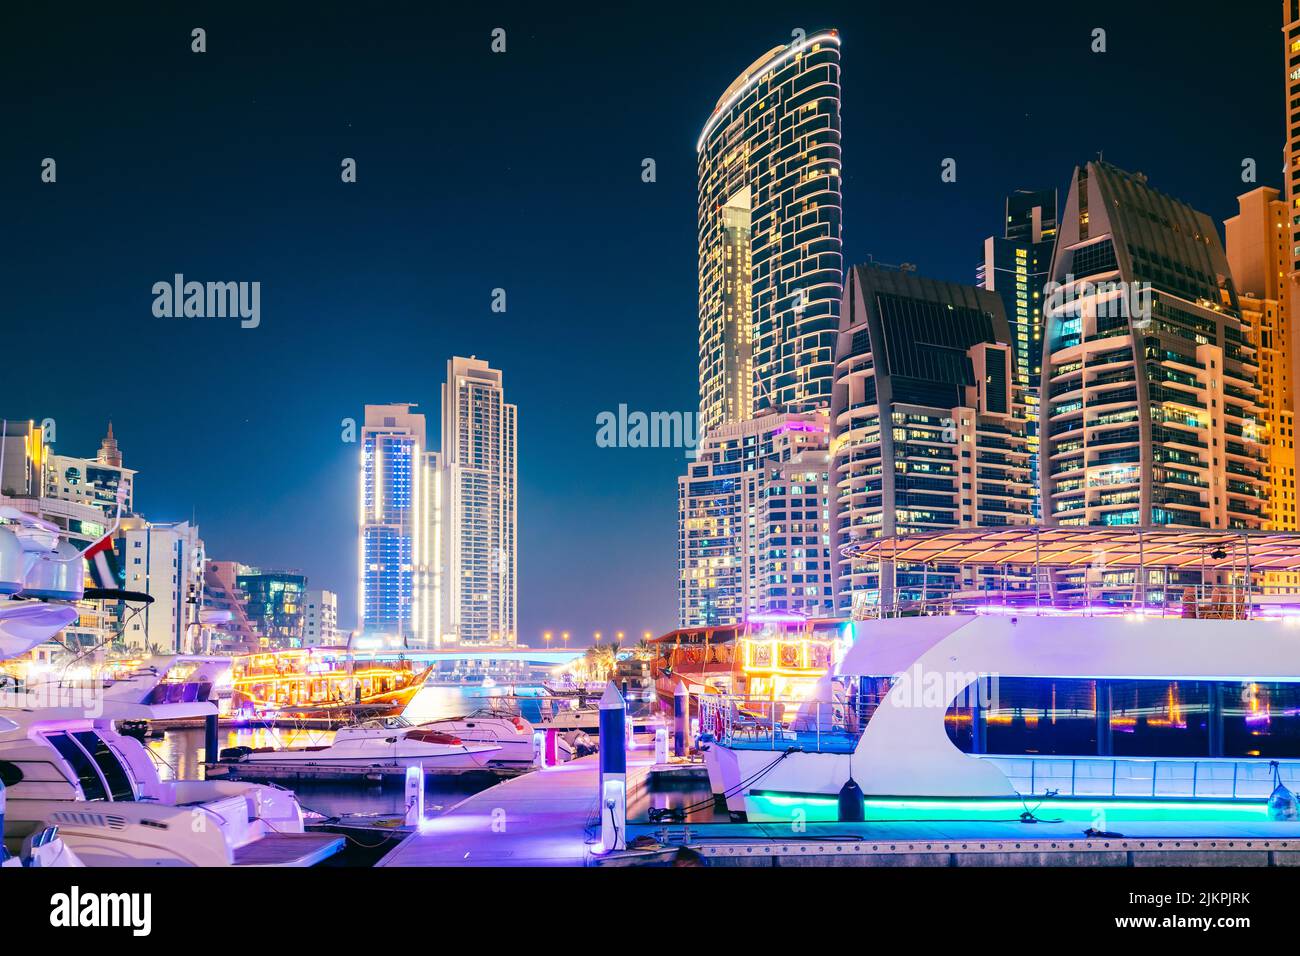 Night view of skyscraper in Dubai Marina And Boats, Yachts Moored Near Pier In Evening Night Illuminations Stock Photo